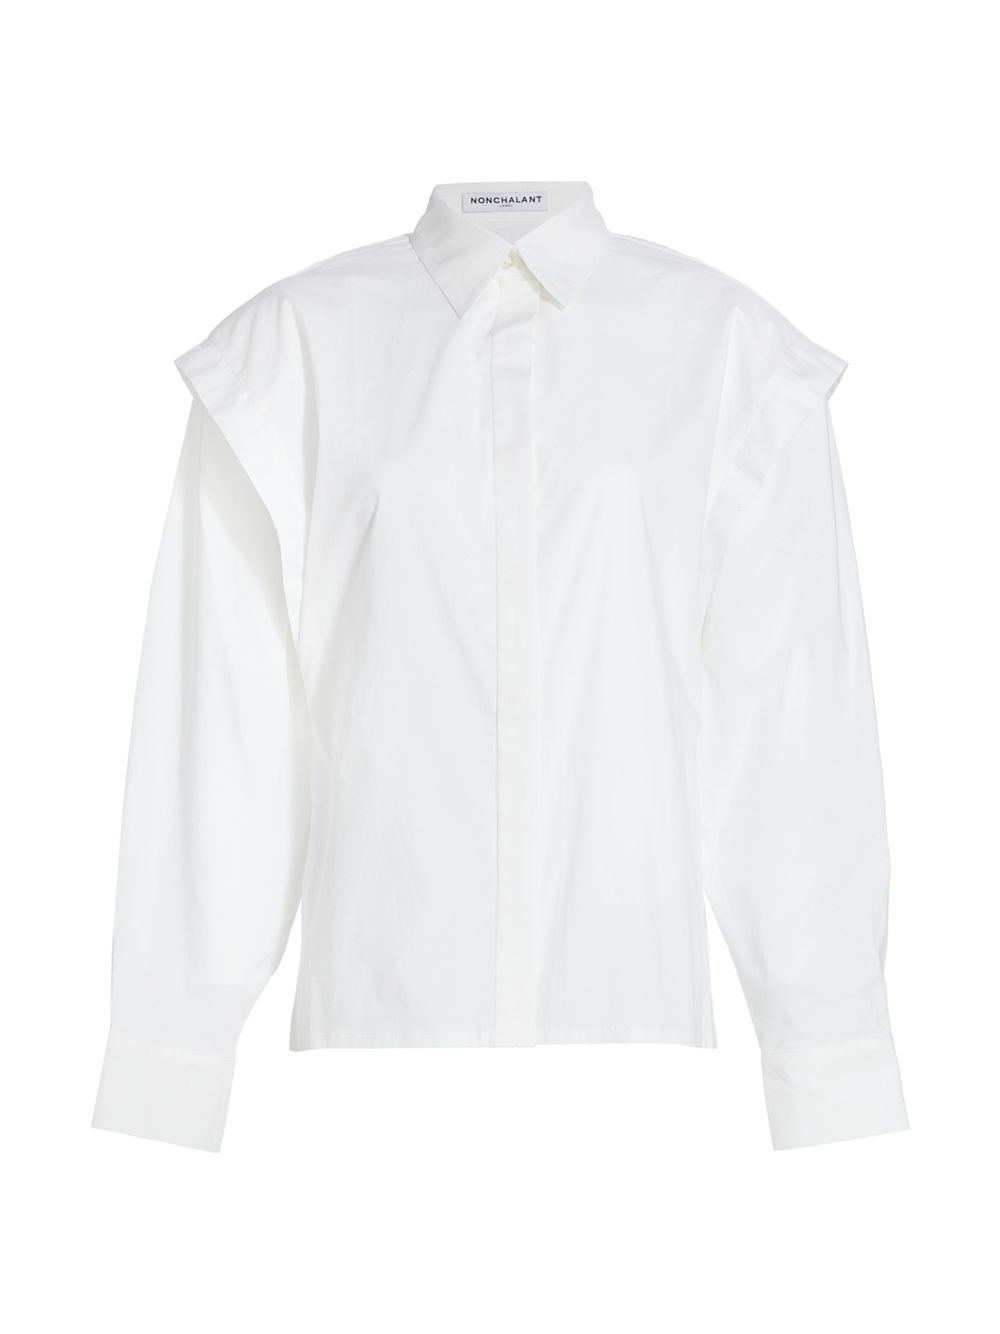 Многослойная рубашка Helga Nonchalant Label, белый цена и фото